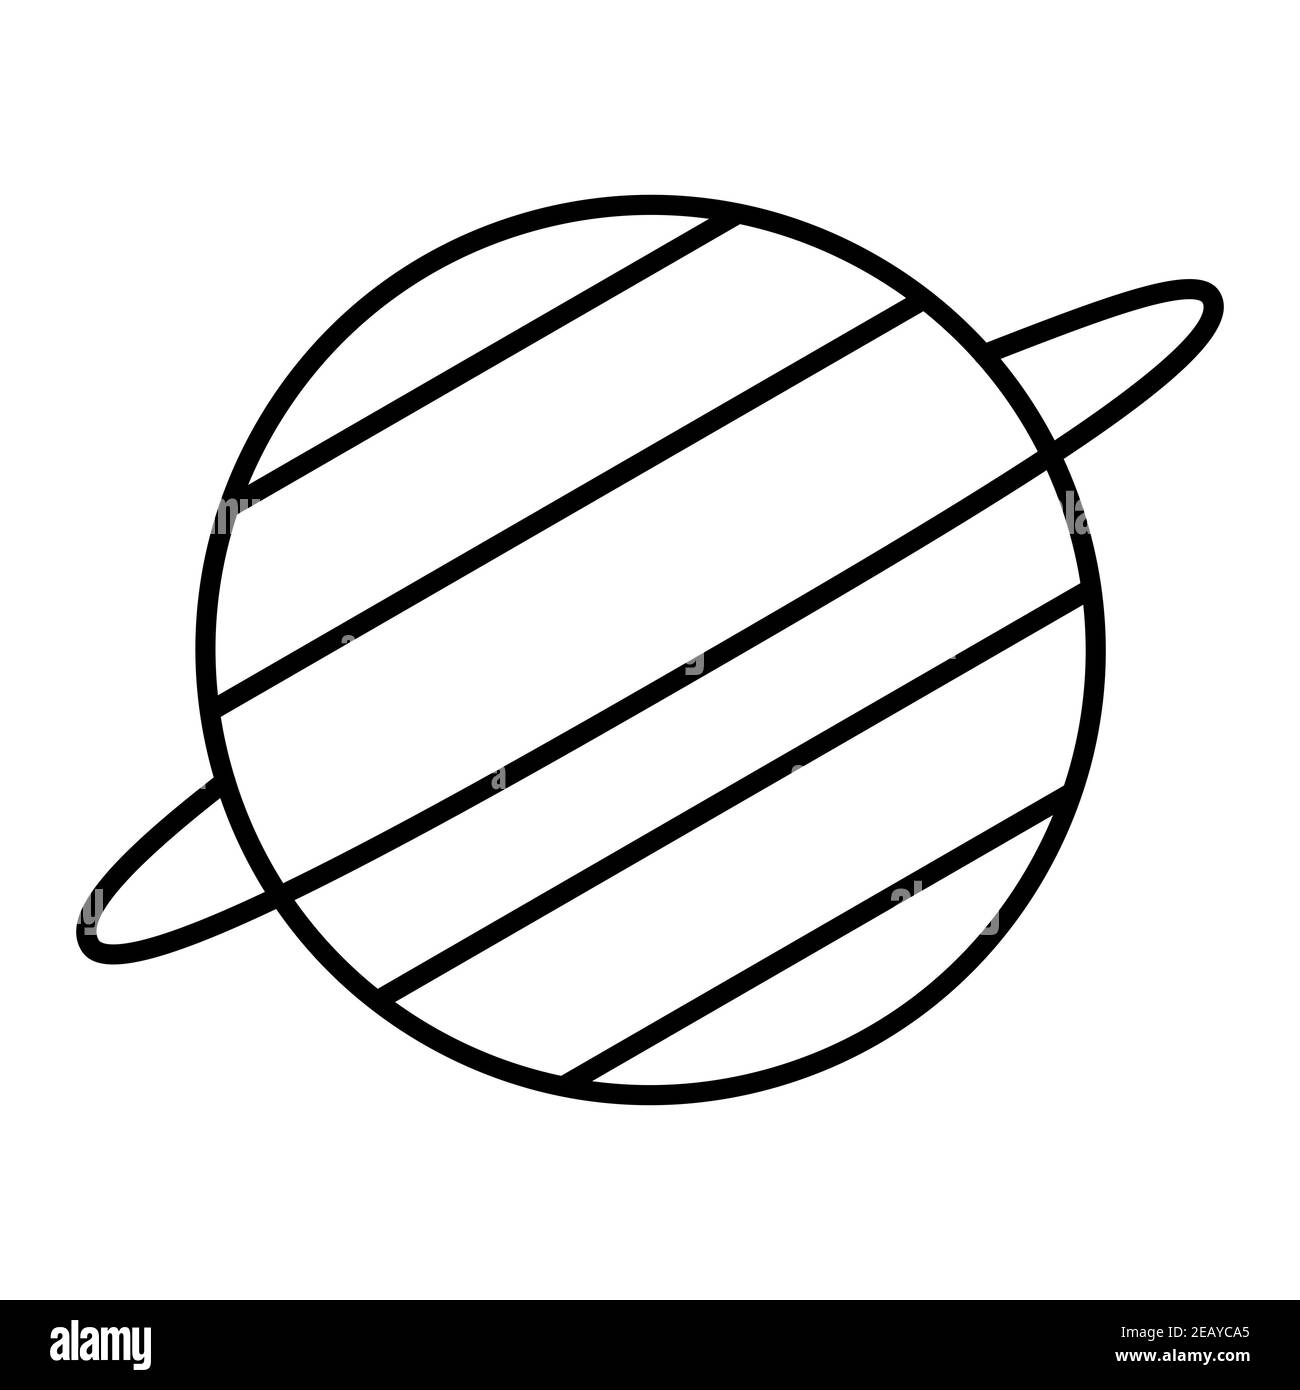 Outline illustration of a Uranus icon Stock Photo